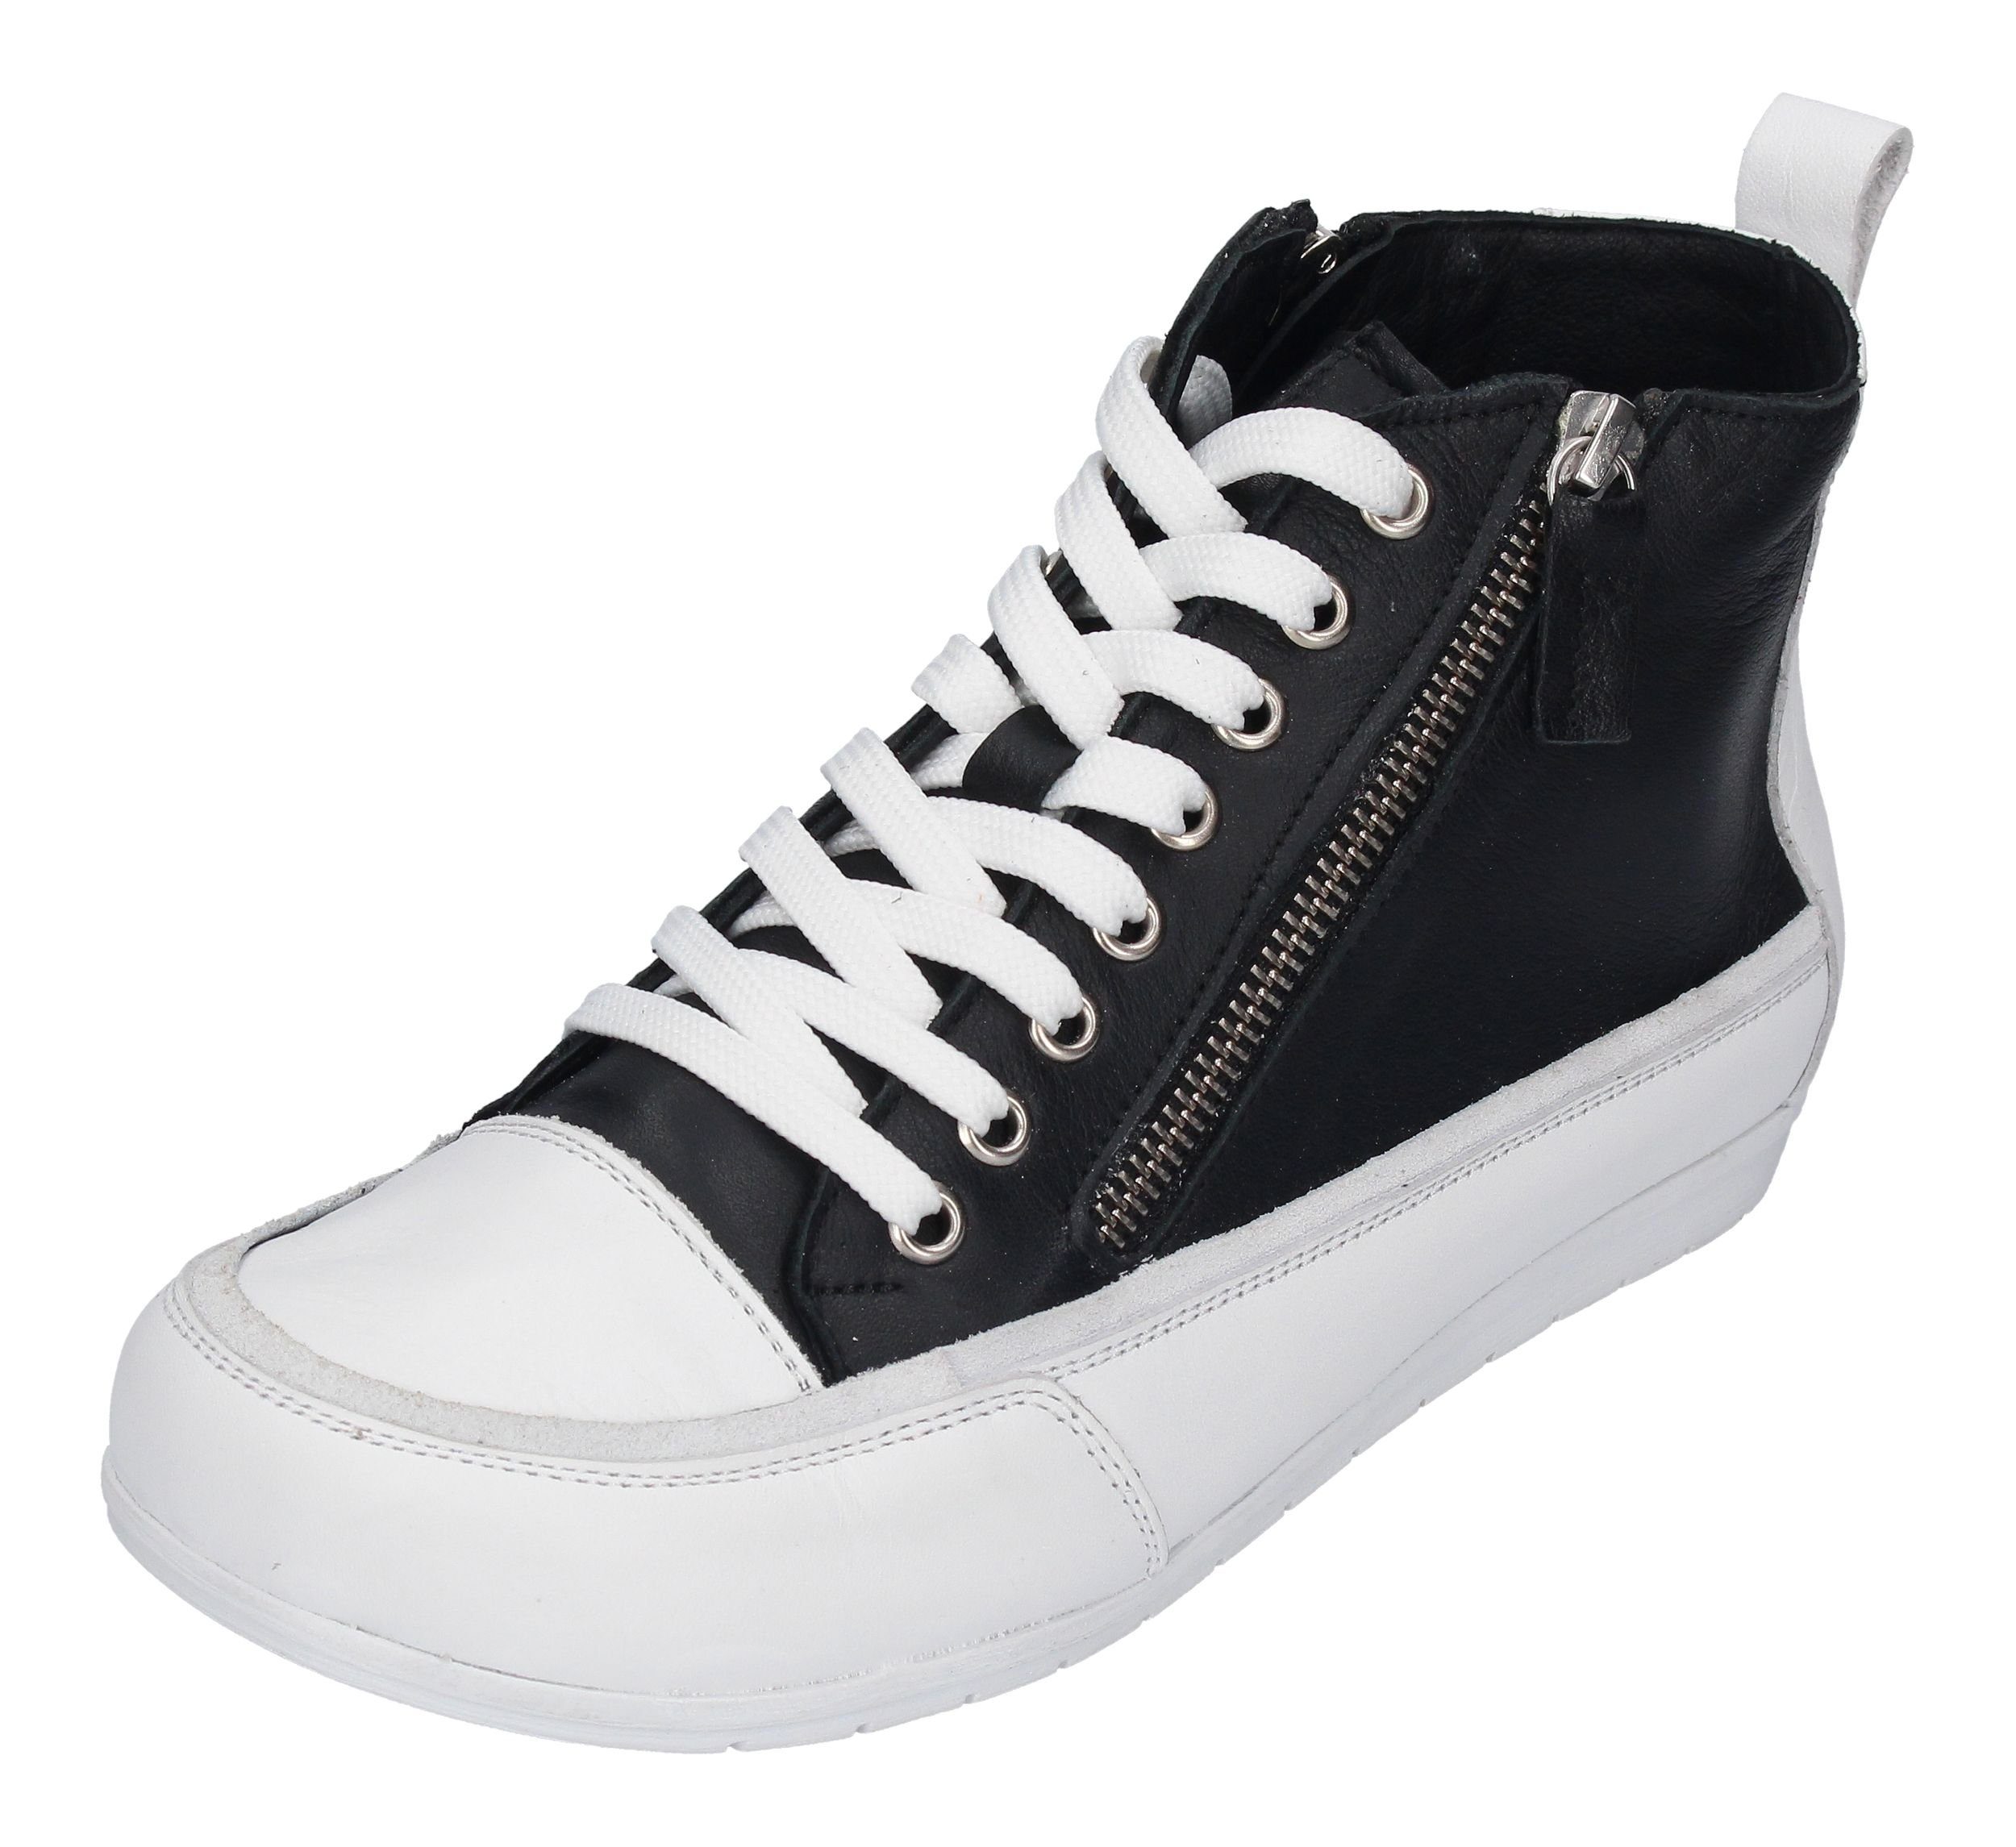 Andrea Conti 0345910-073 Sneaker Schwarz Weiß